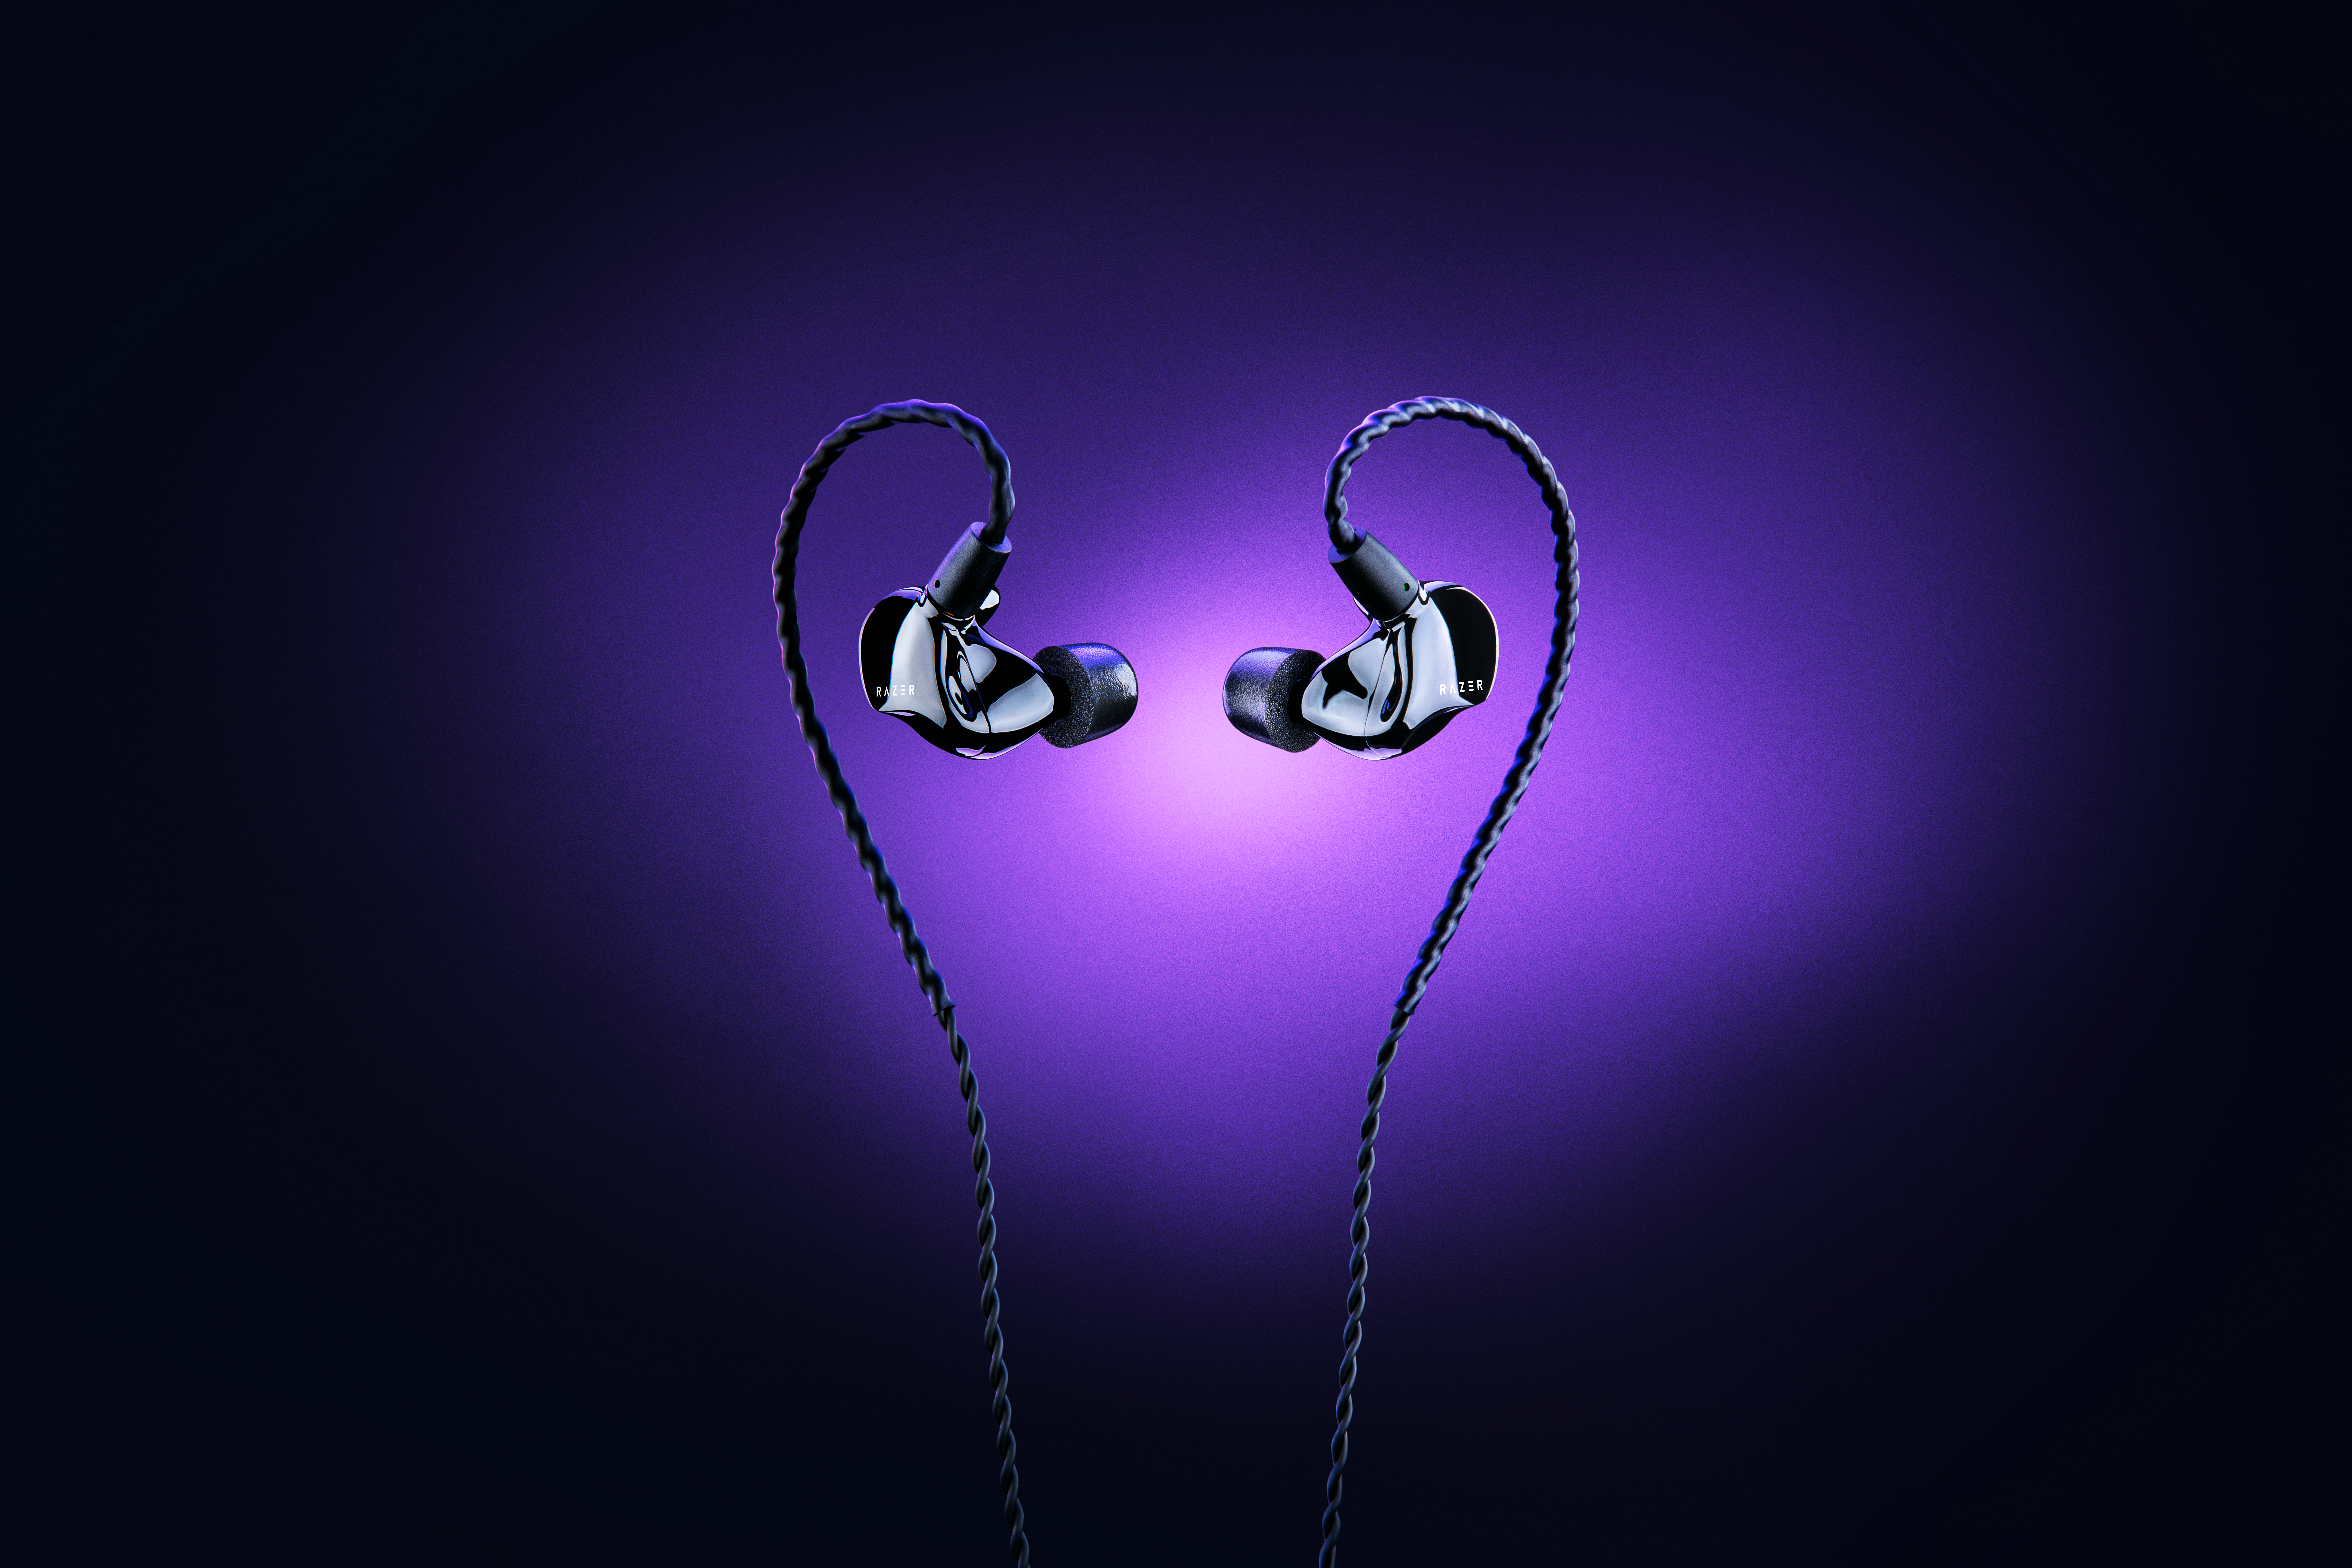 Razer THX Certified Razer headphones